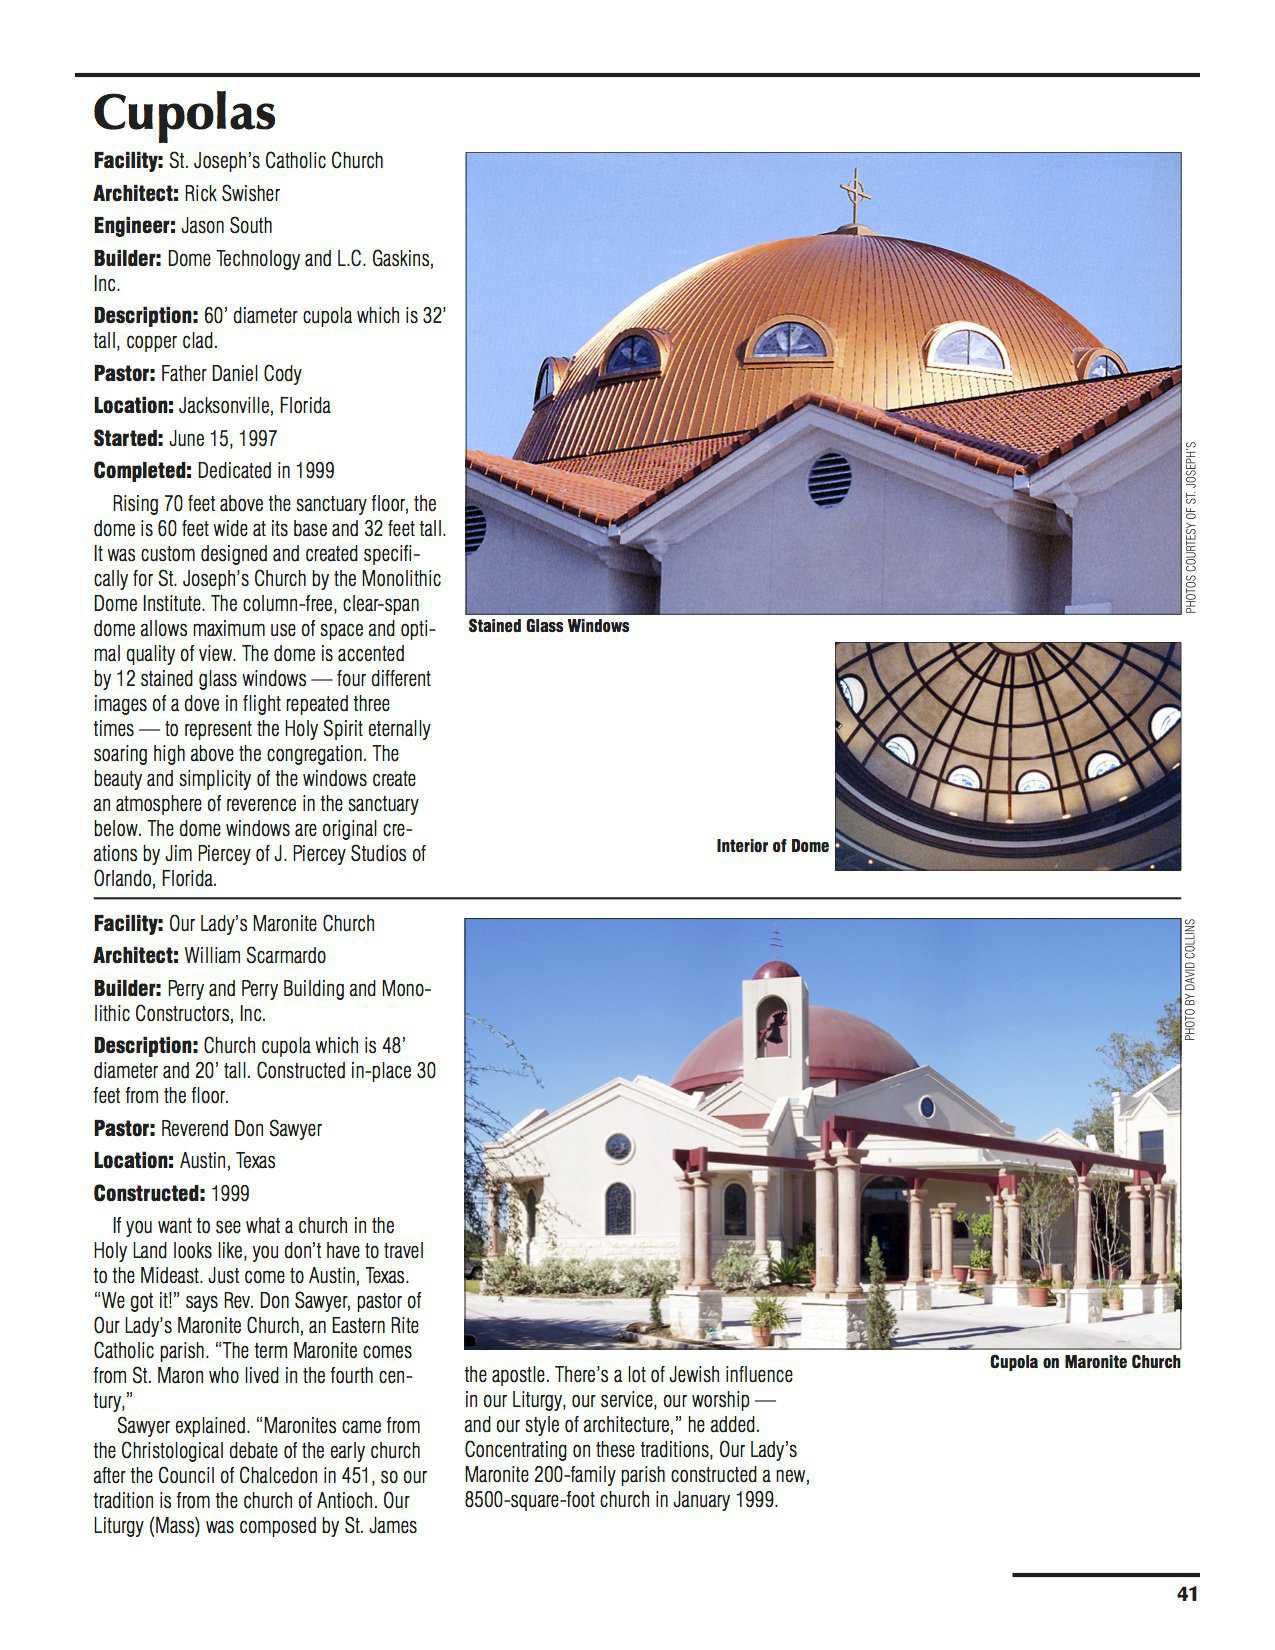 Sample pages – The Cupolas at St. Joseph’s Catholic Church, Austin, Texas